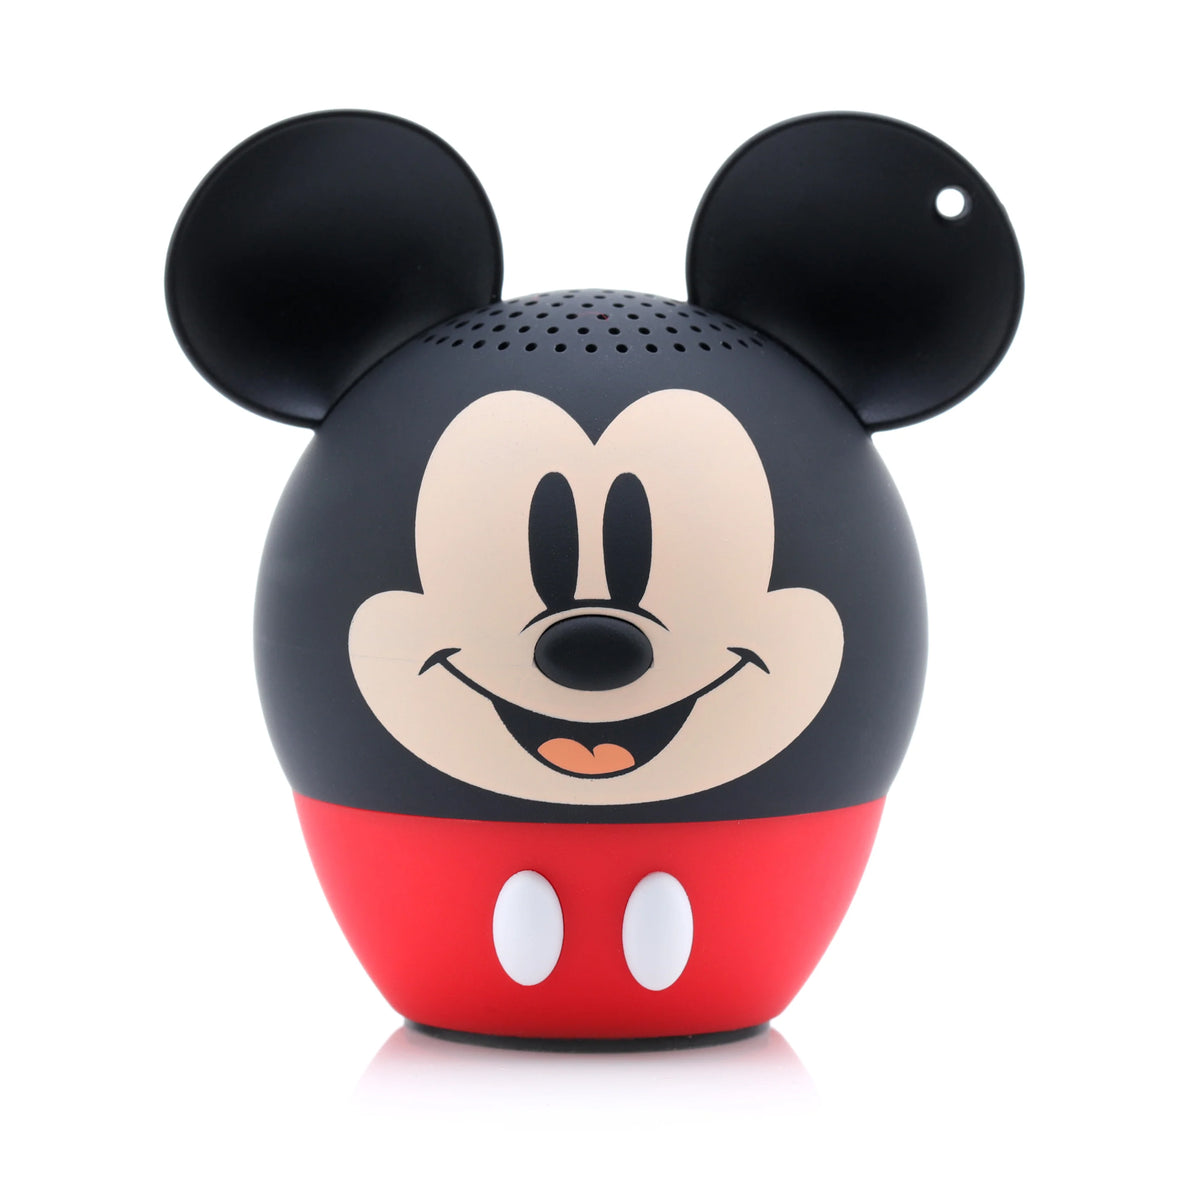 Disney Sensational Six Mickey Mouse Wireless Bluetooth Speaker